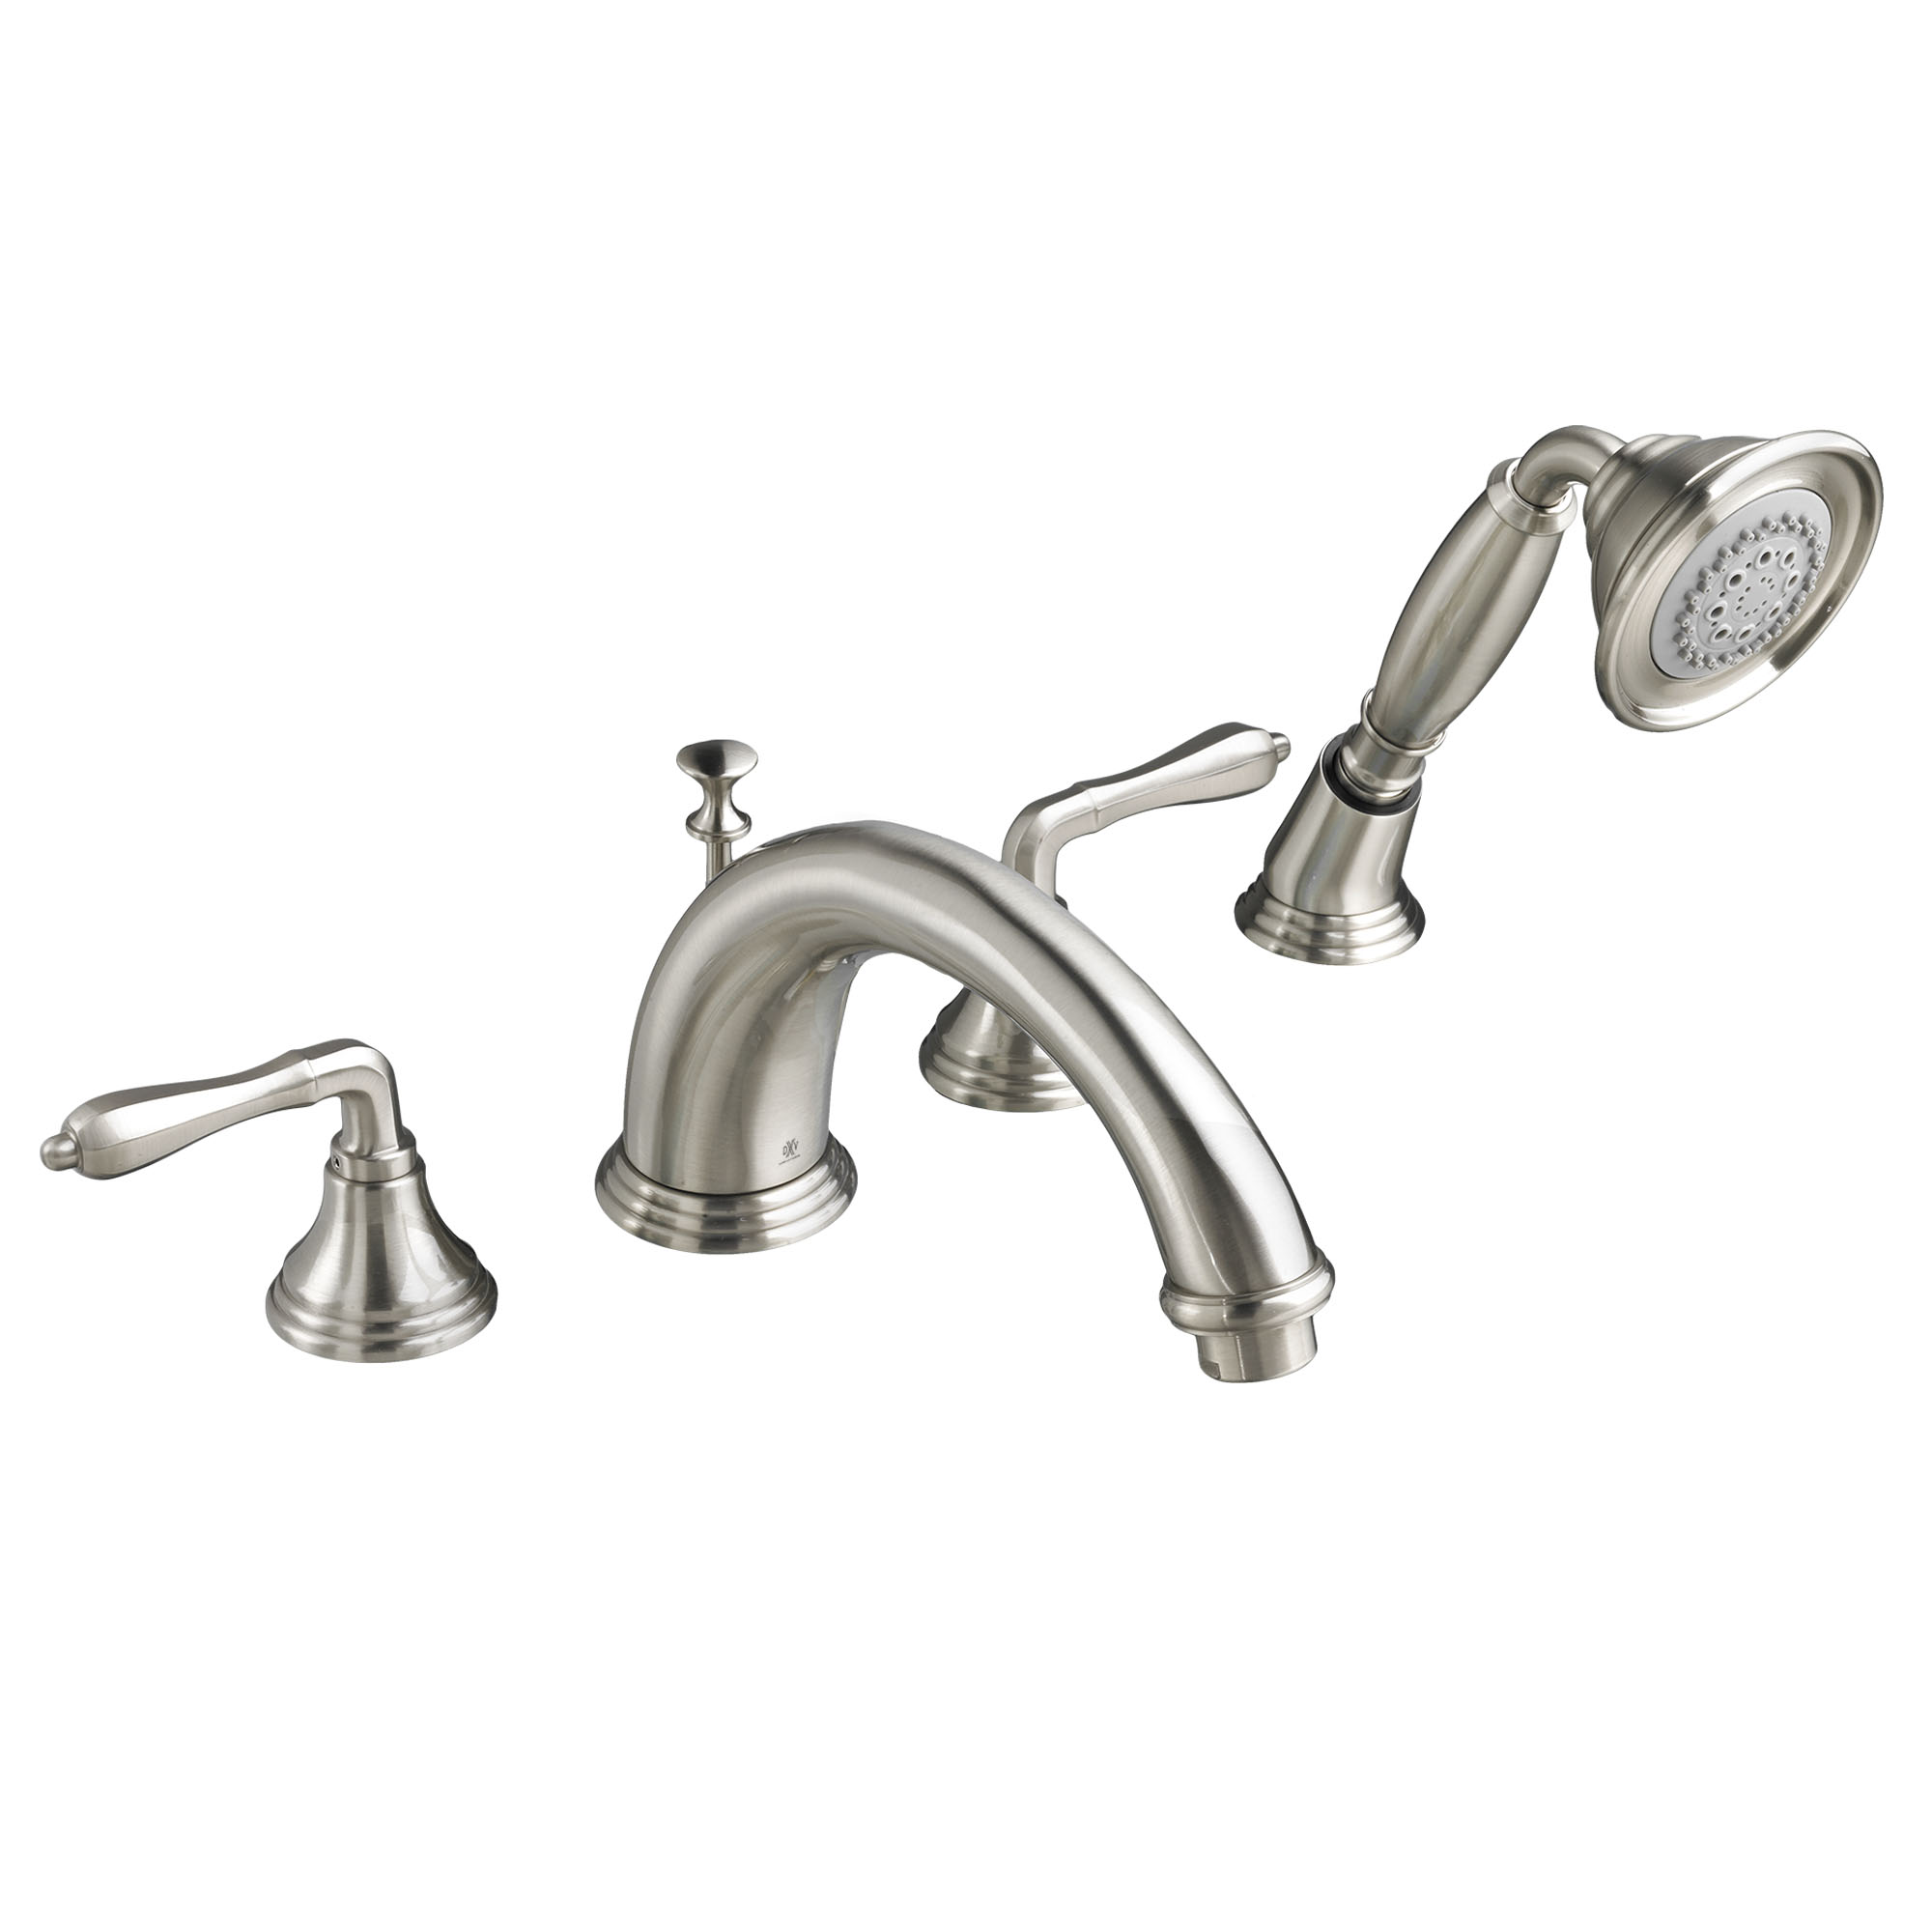 Ashbee 2-Handle Deck Mount Bathtub Faucet with Lever Handles